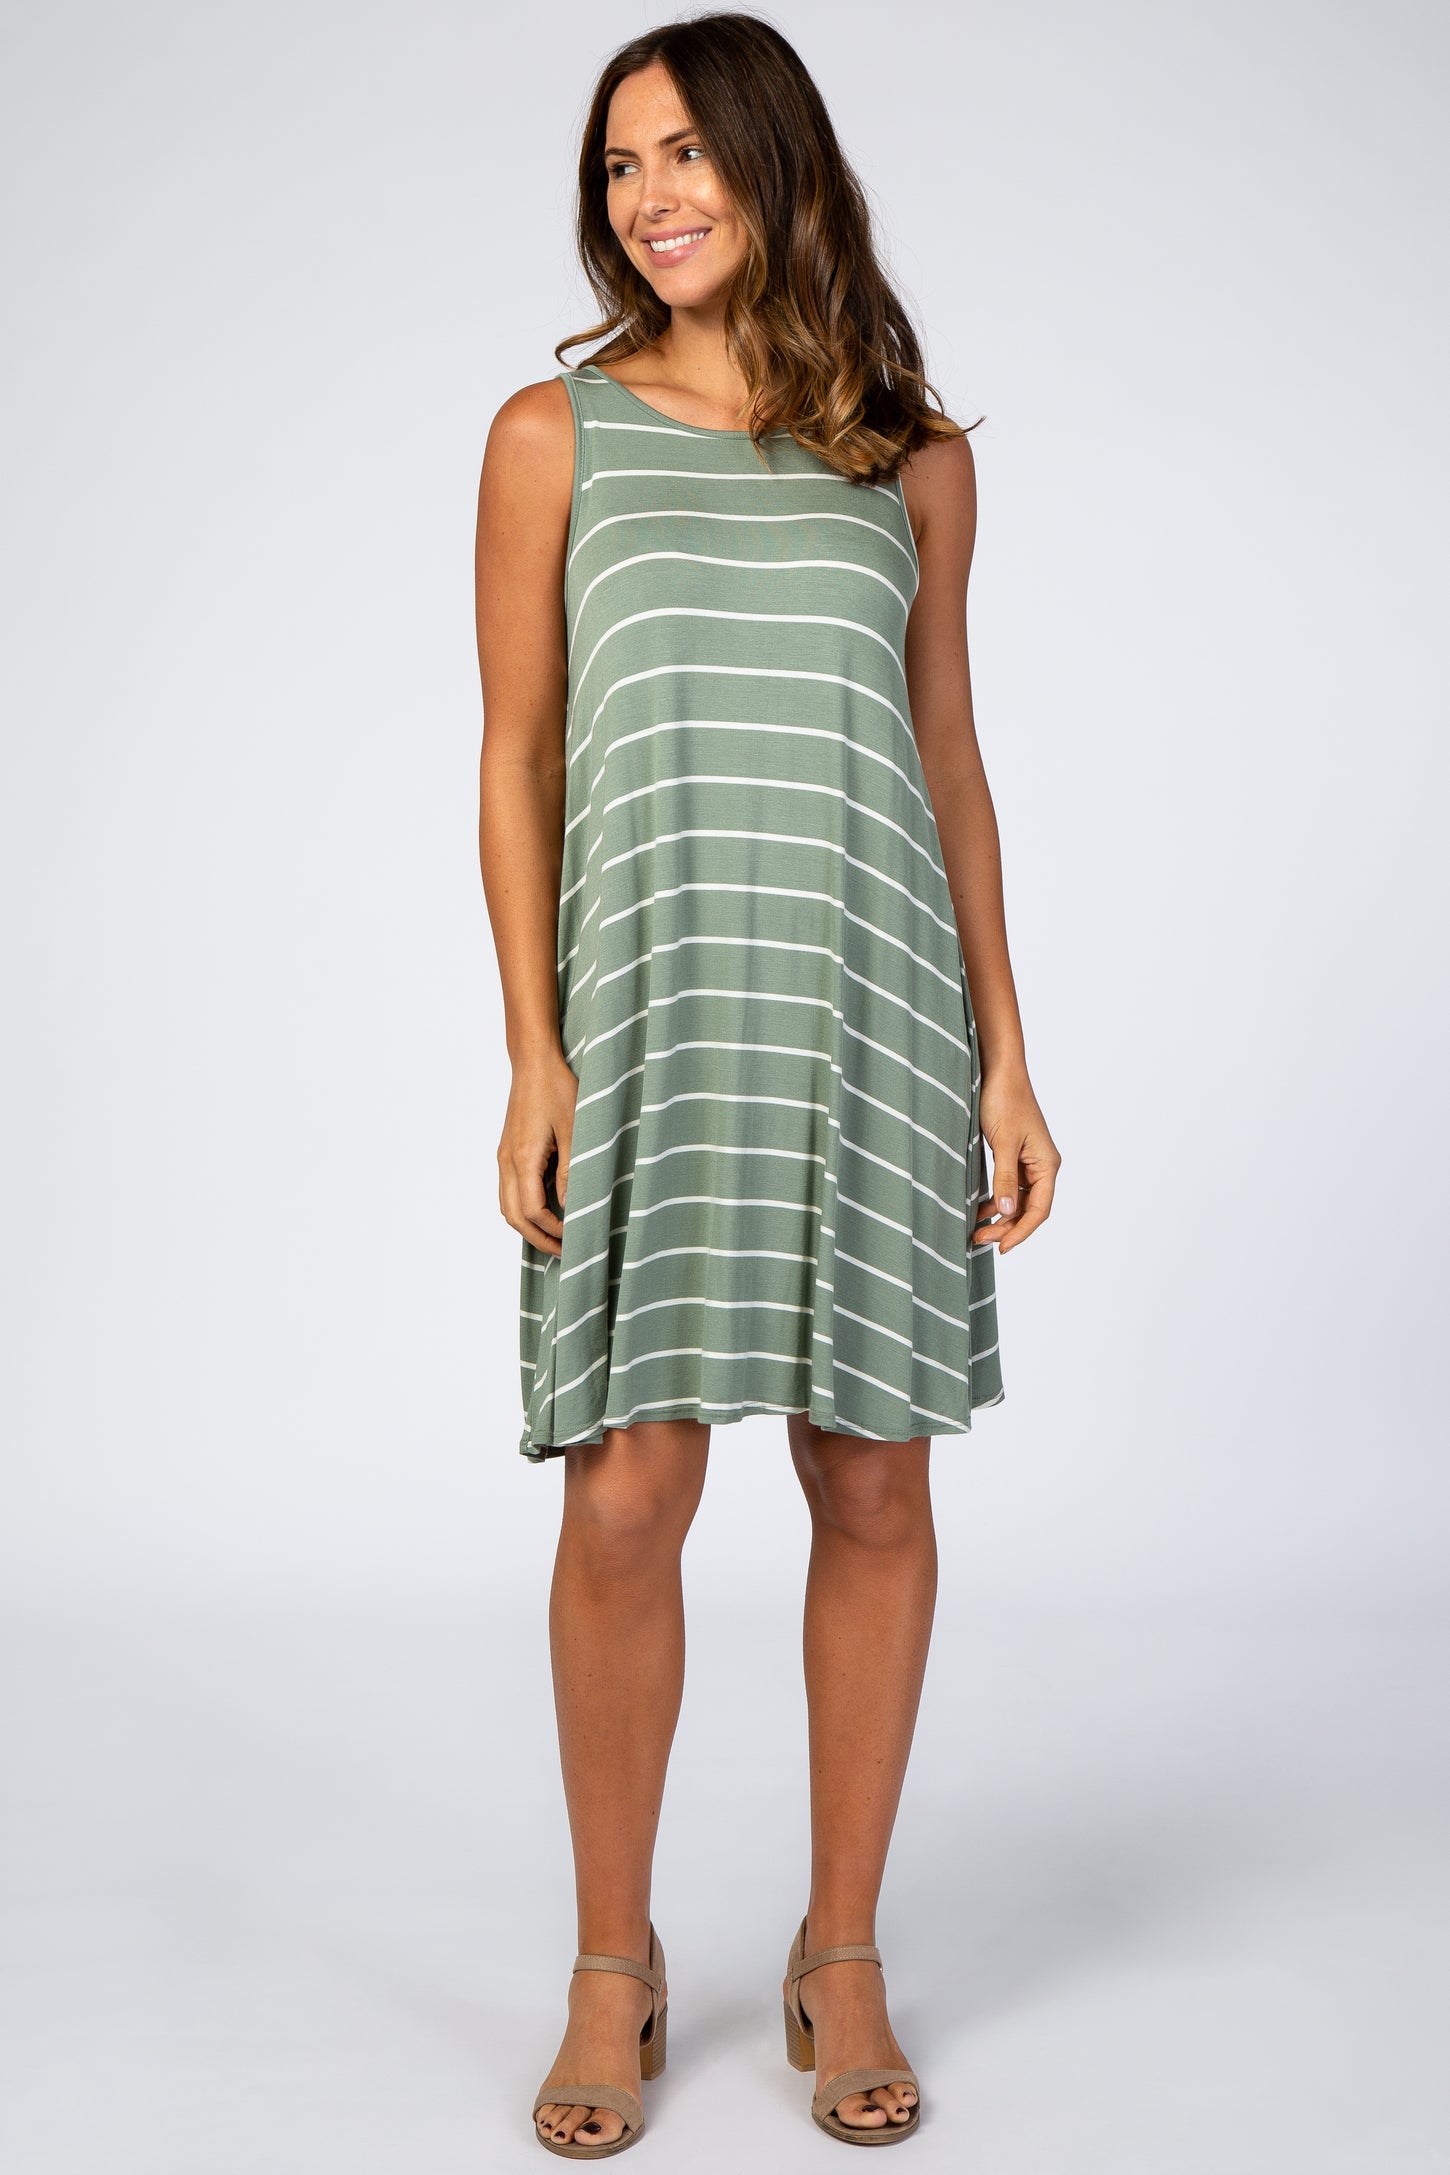 Light Olive Striped Sleeveless Maternity Dress